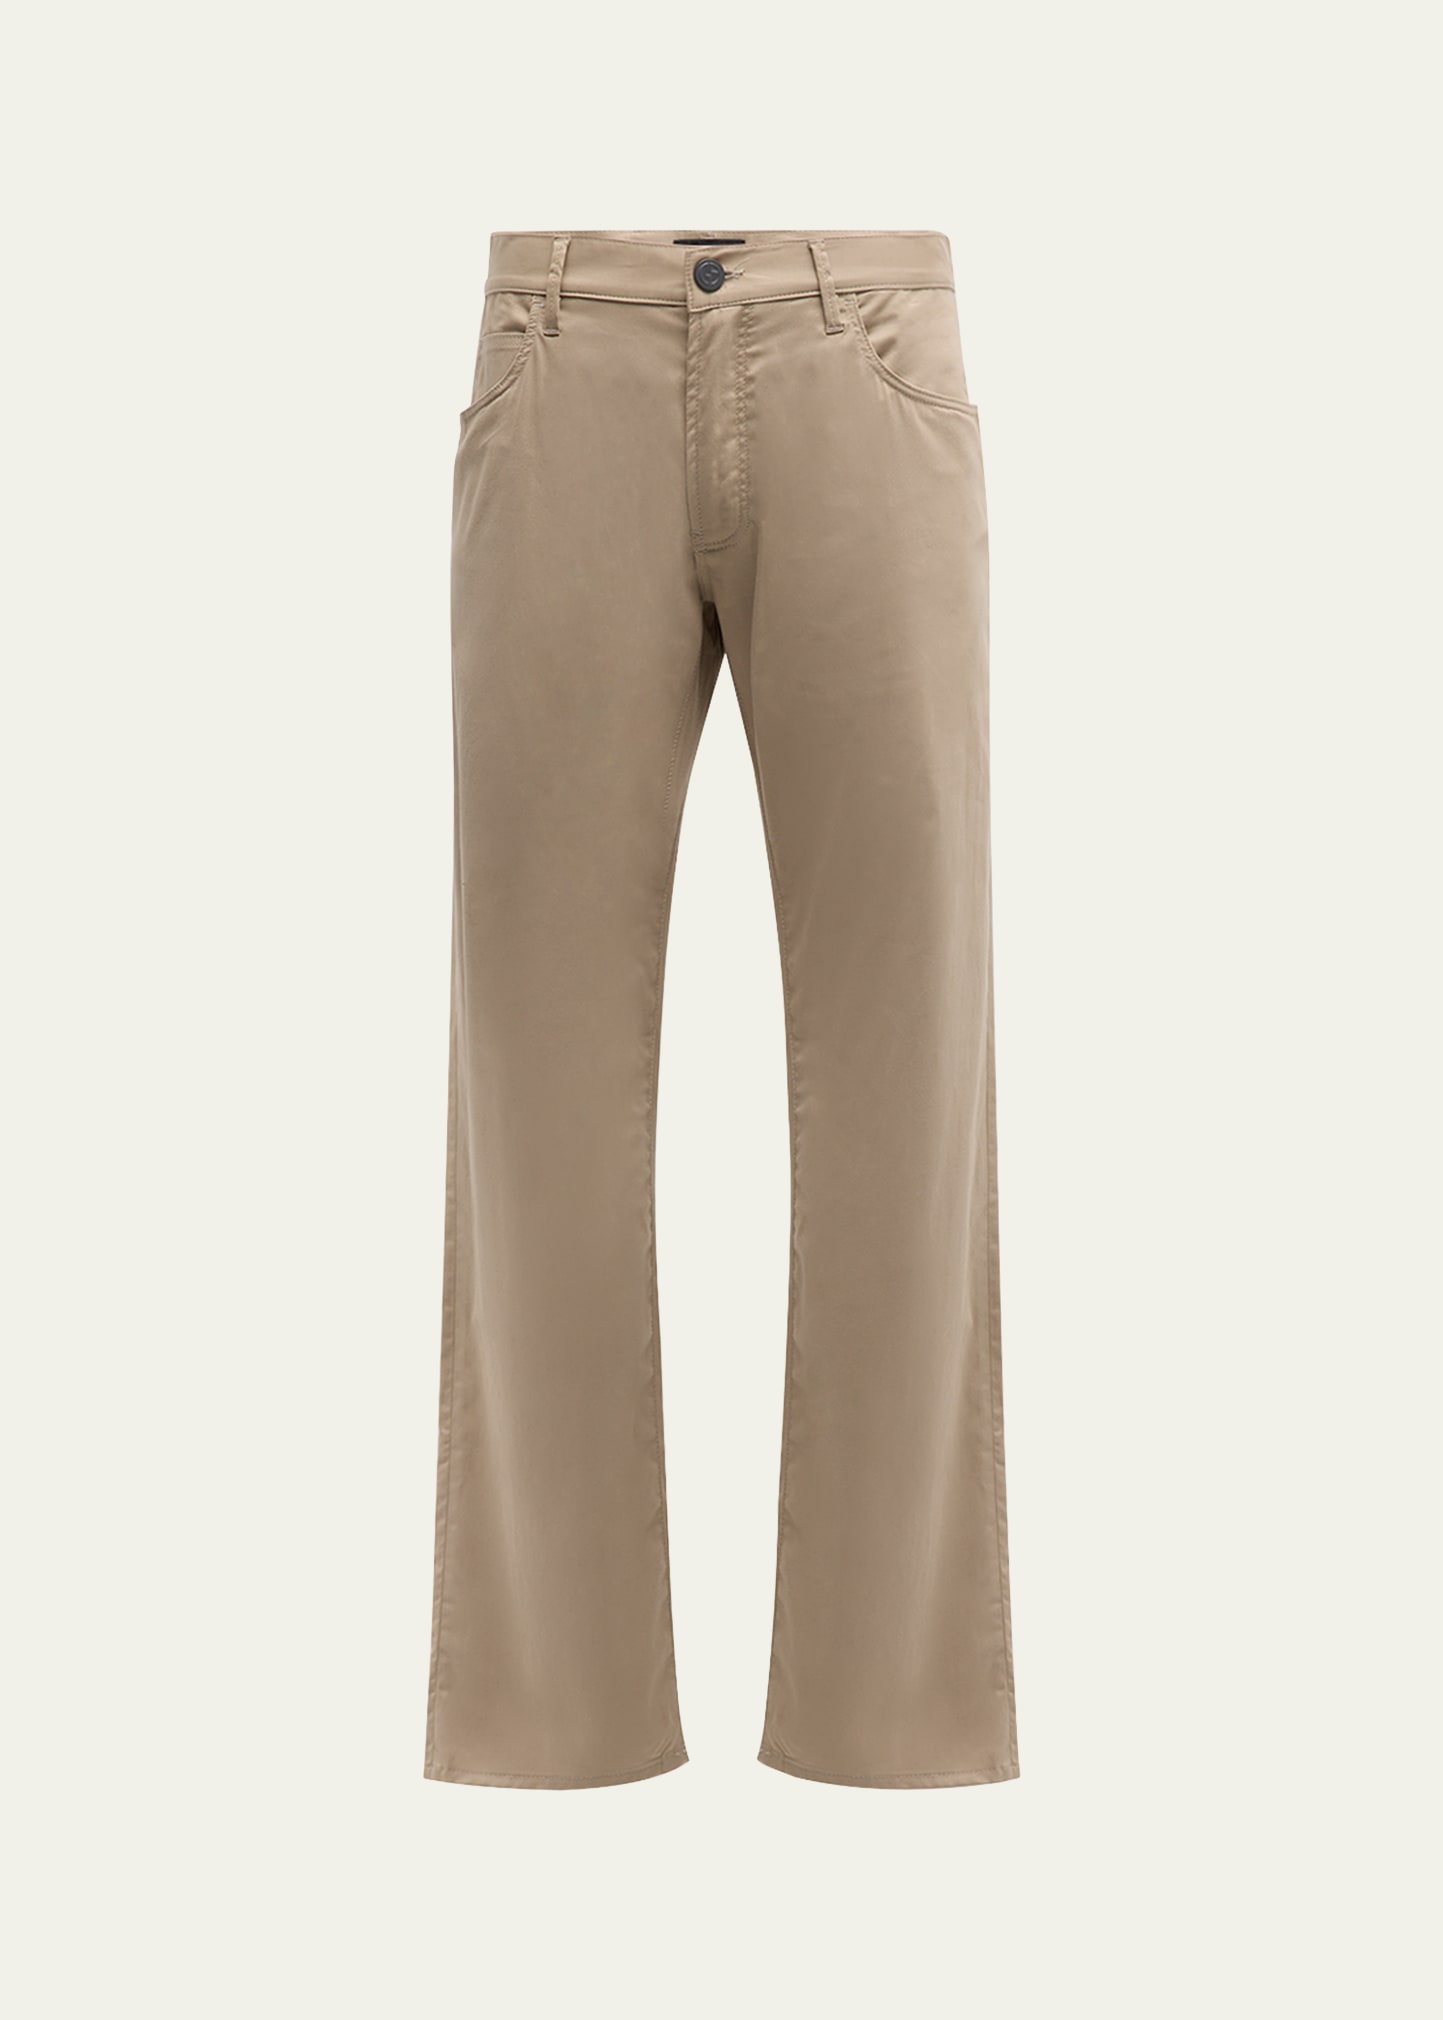 Giorgio Armani Men's Cotton-silk Stretch Pants In Solid Medium Beig